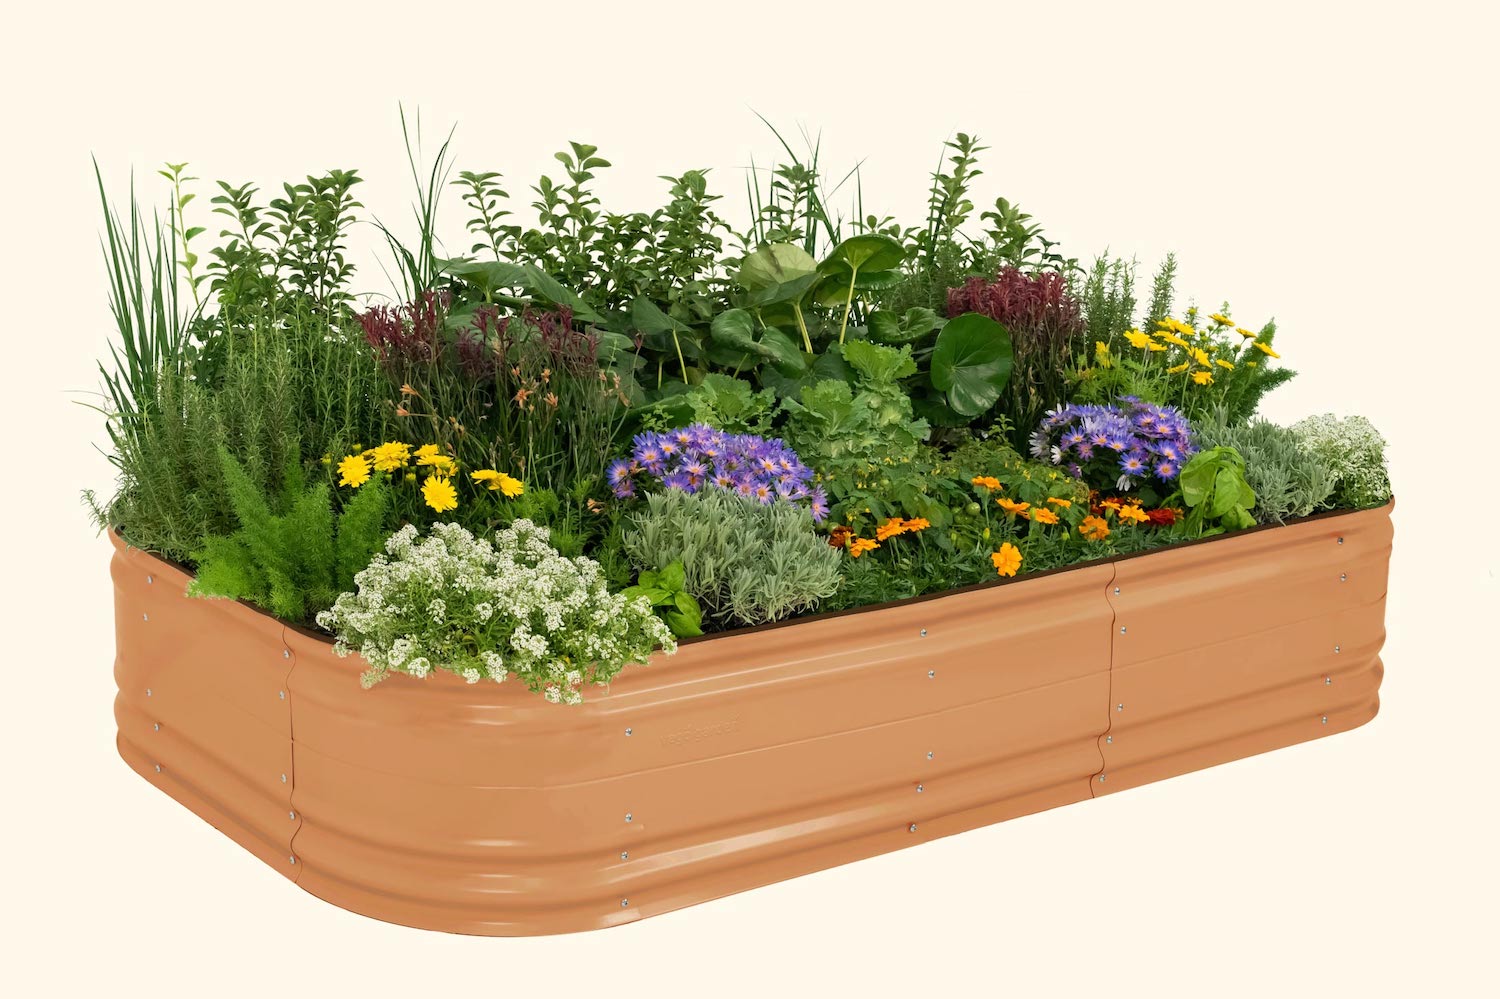 vego terracotta garden bed